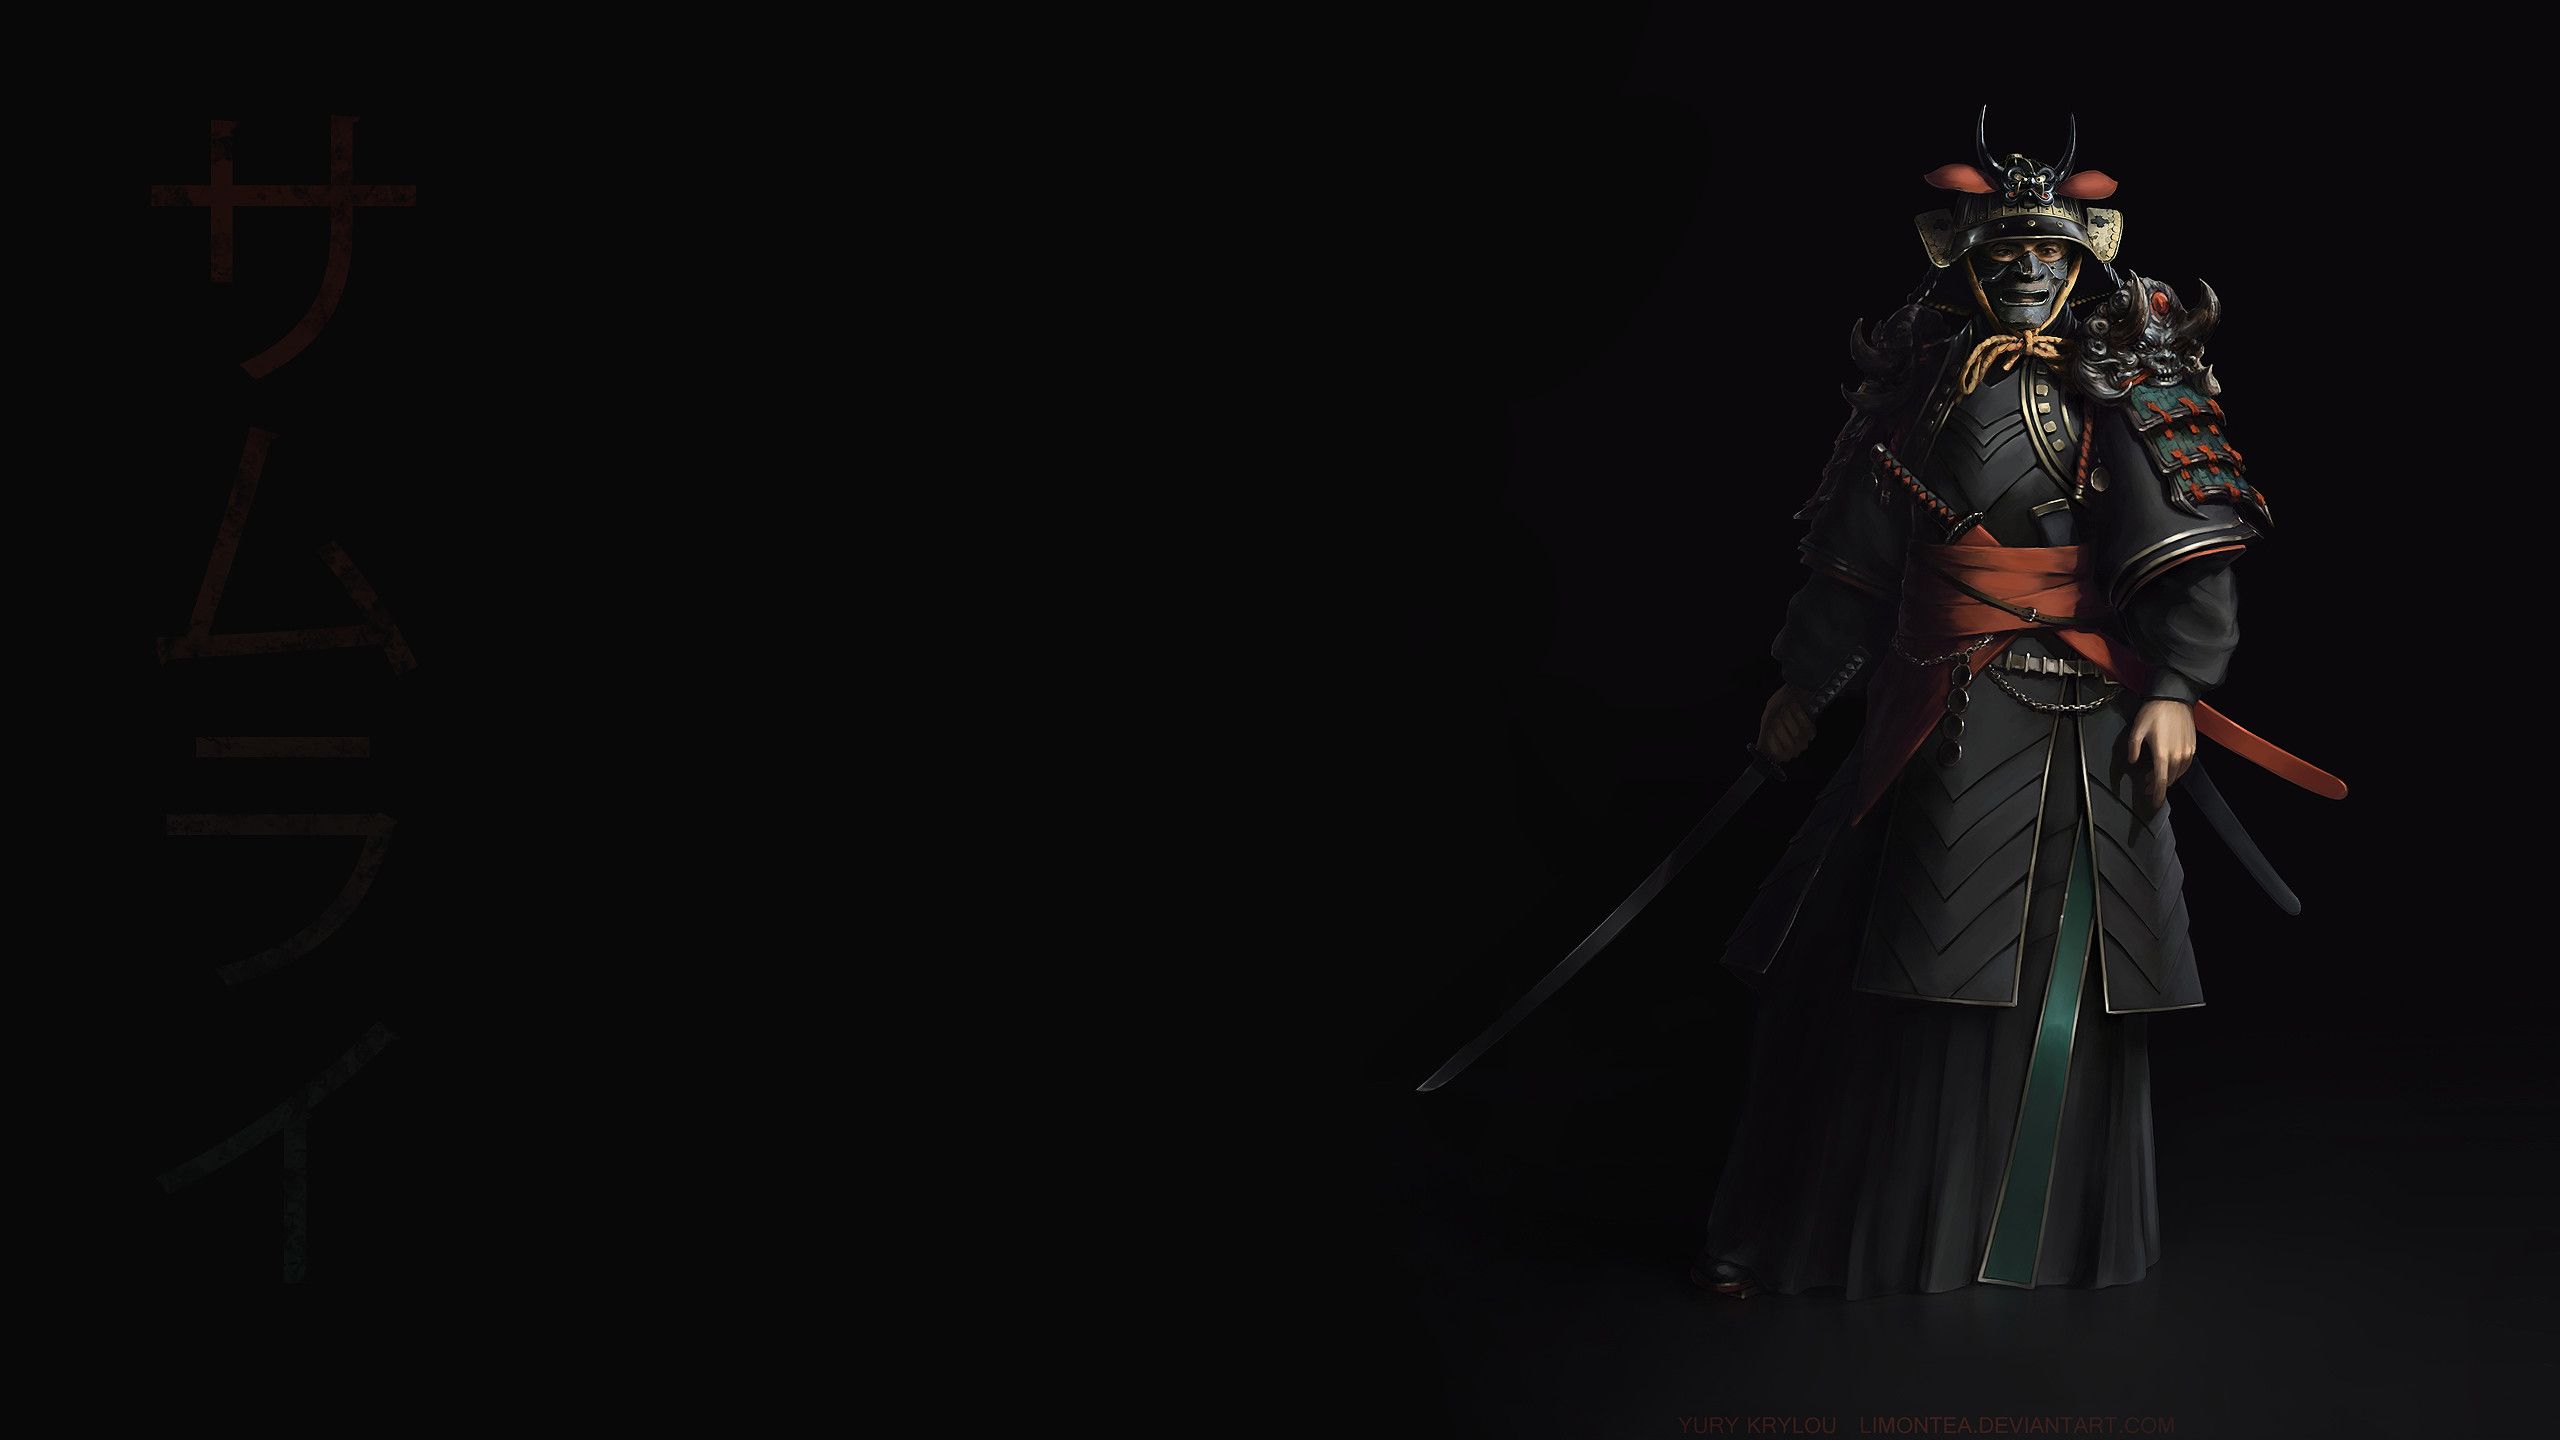 Samurai Warrior Wallpaper HD background picture